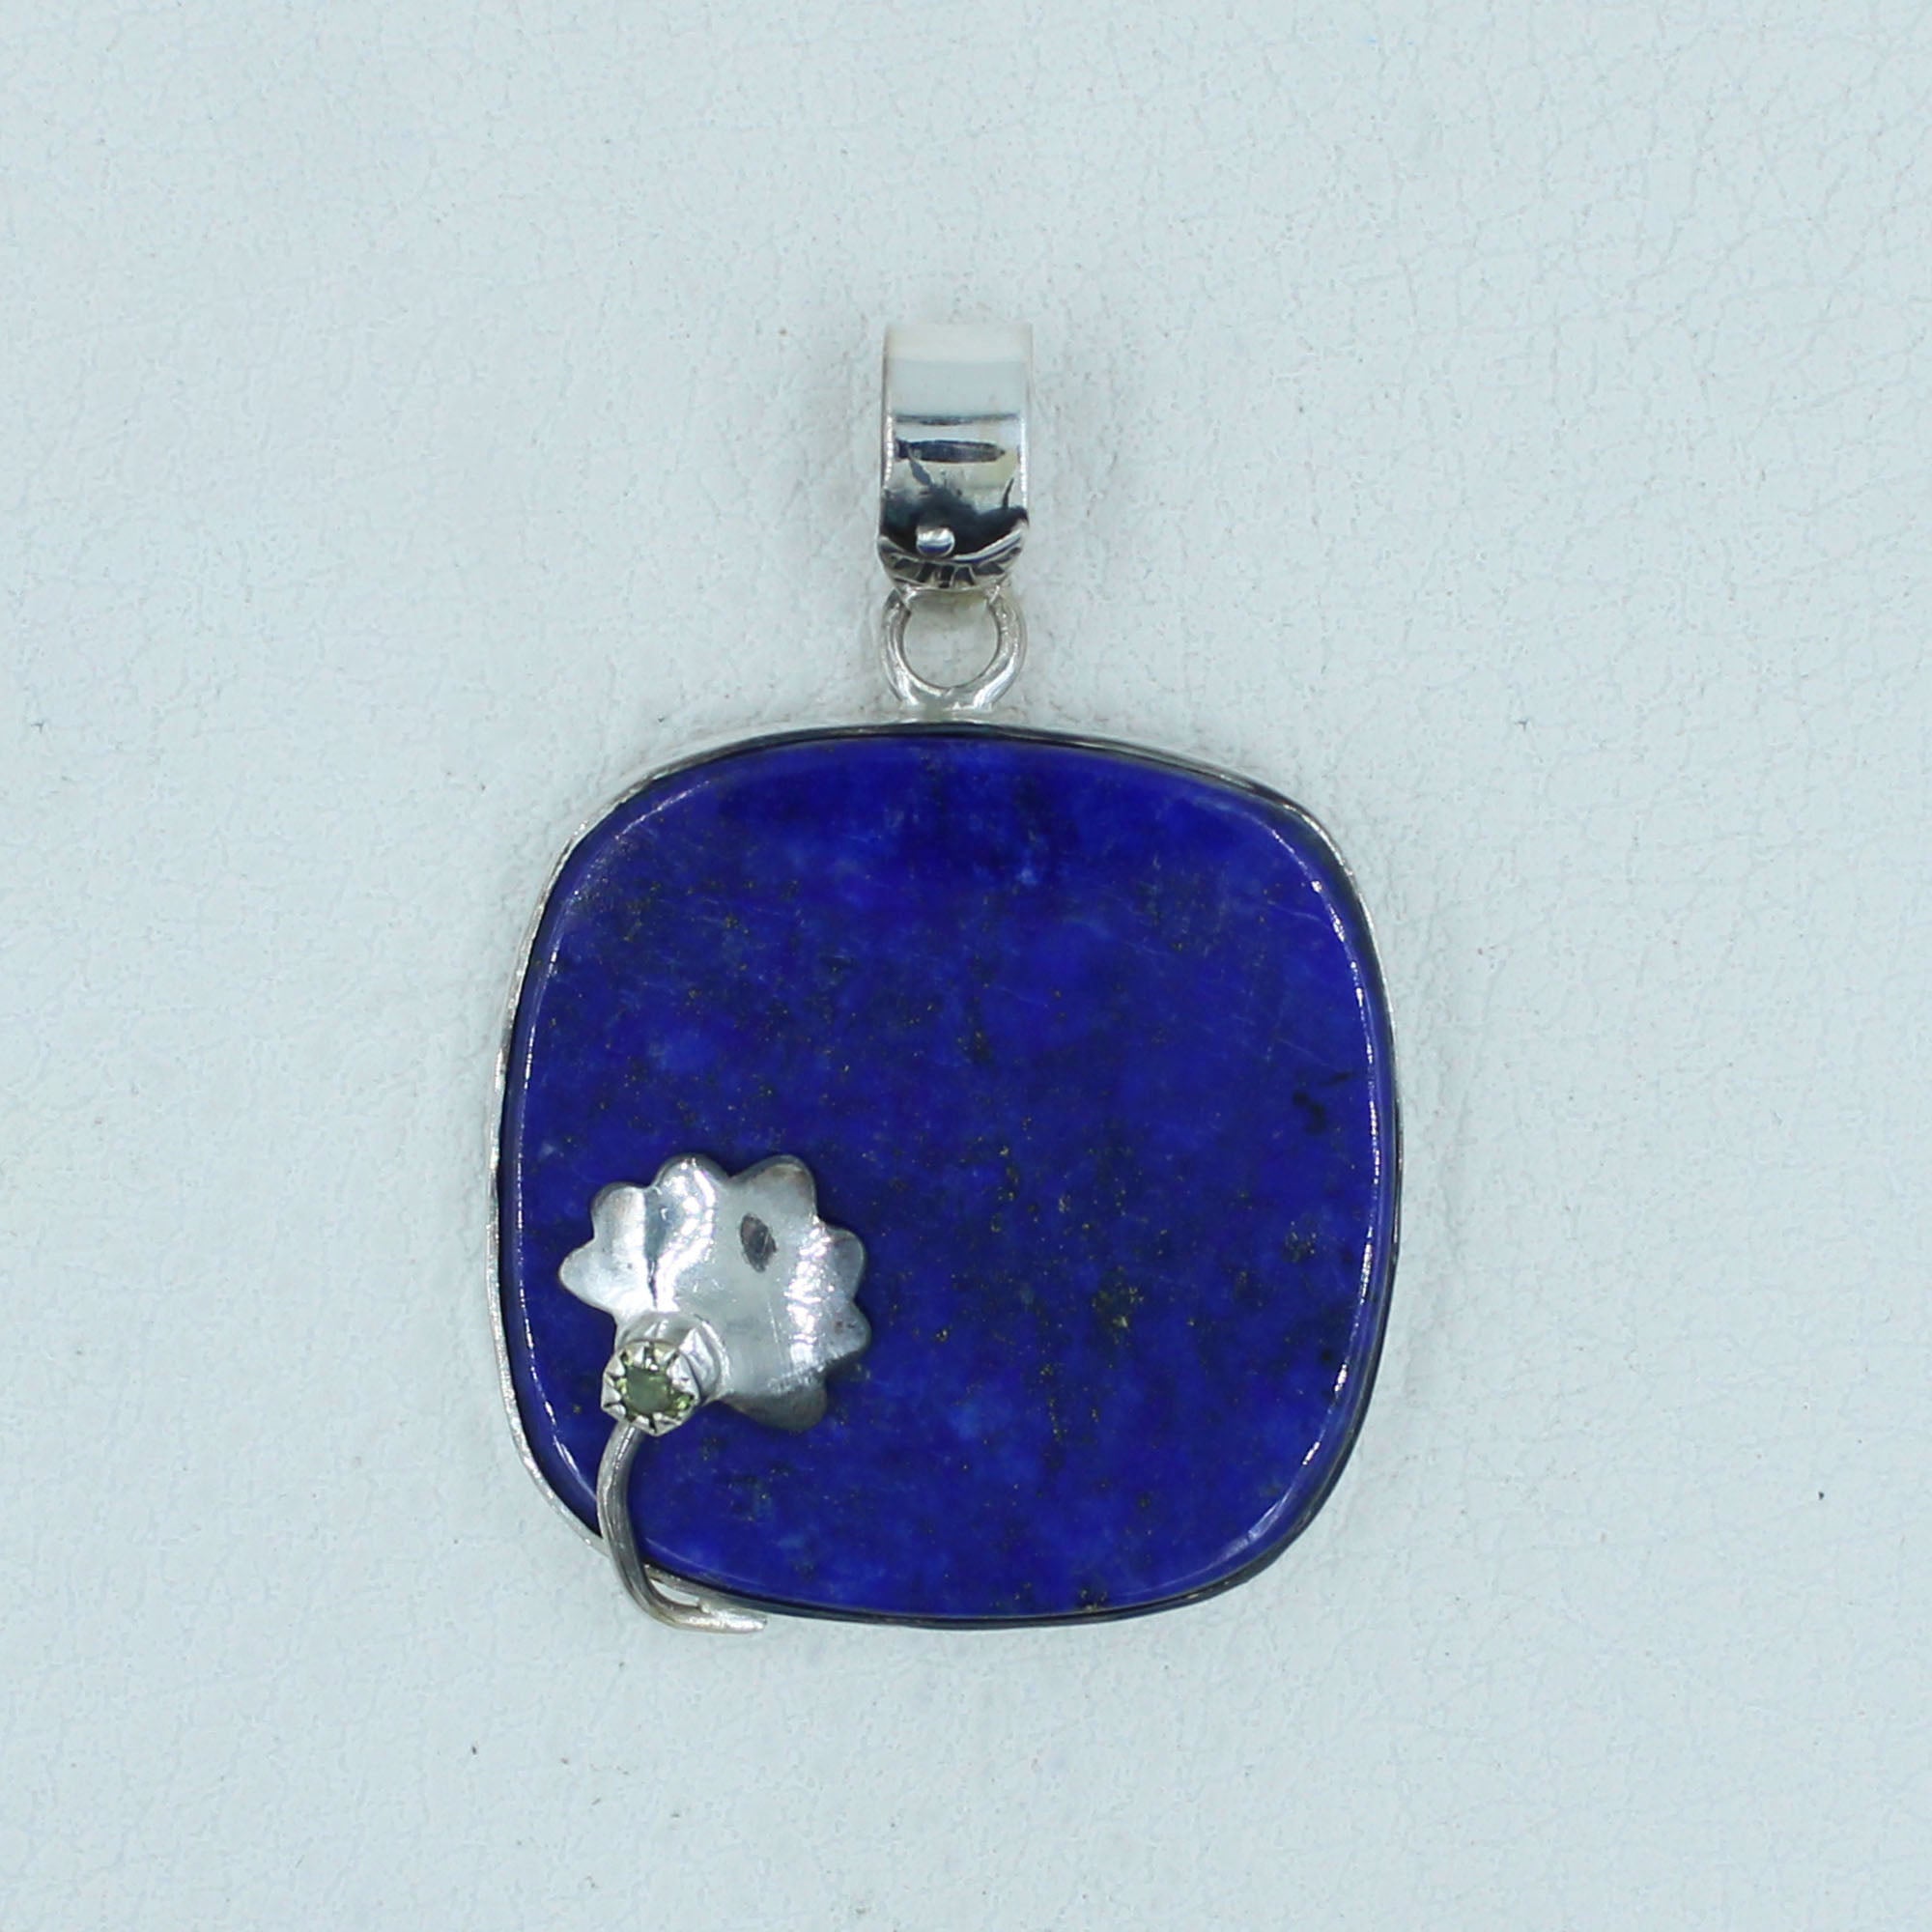 Lapis Lazuli with pyrite speckles Pendant